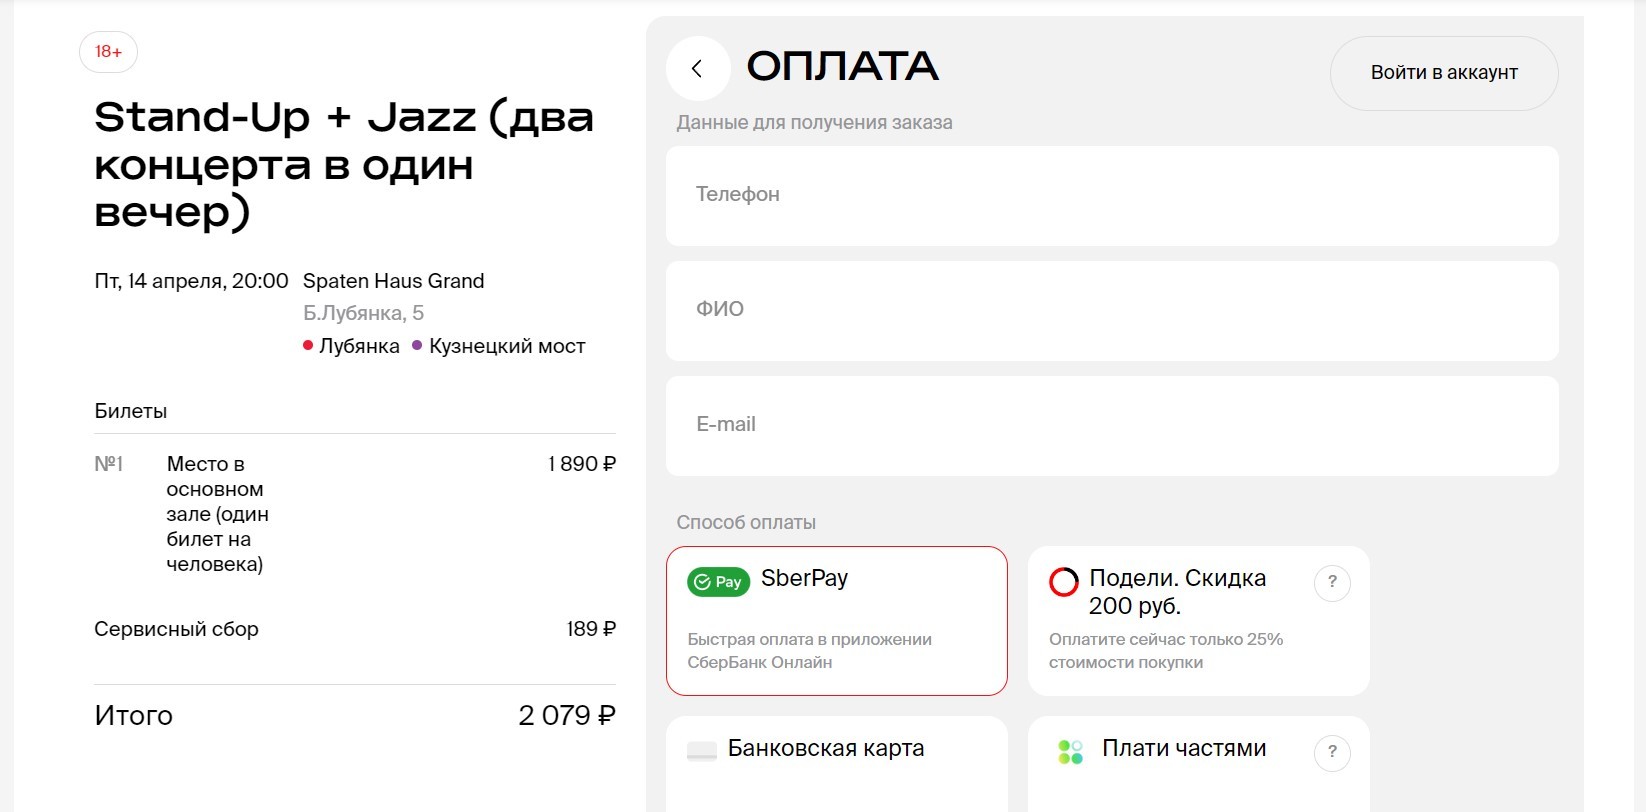 Покупка билета на сайте Афиша.ру